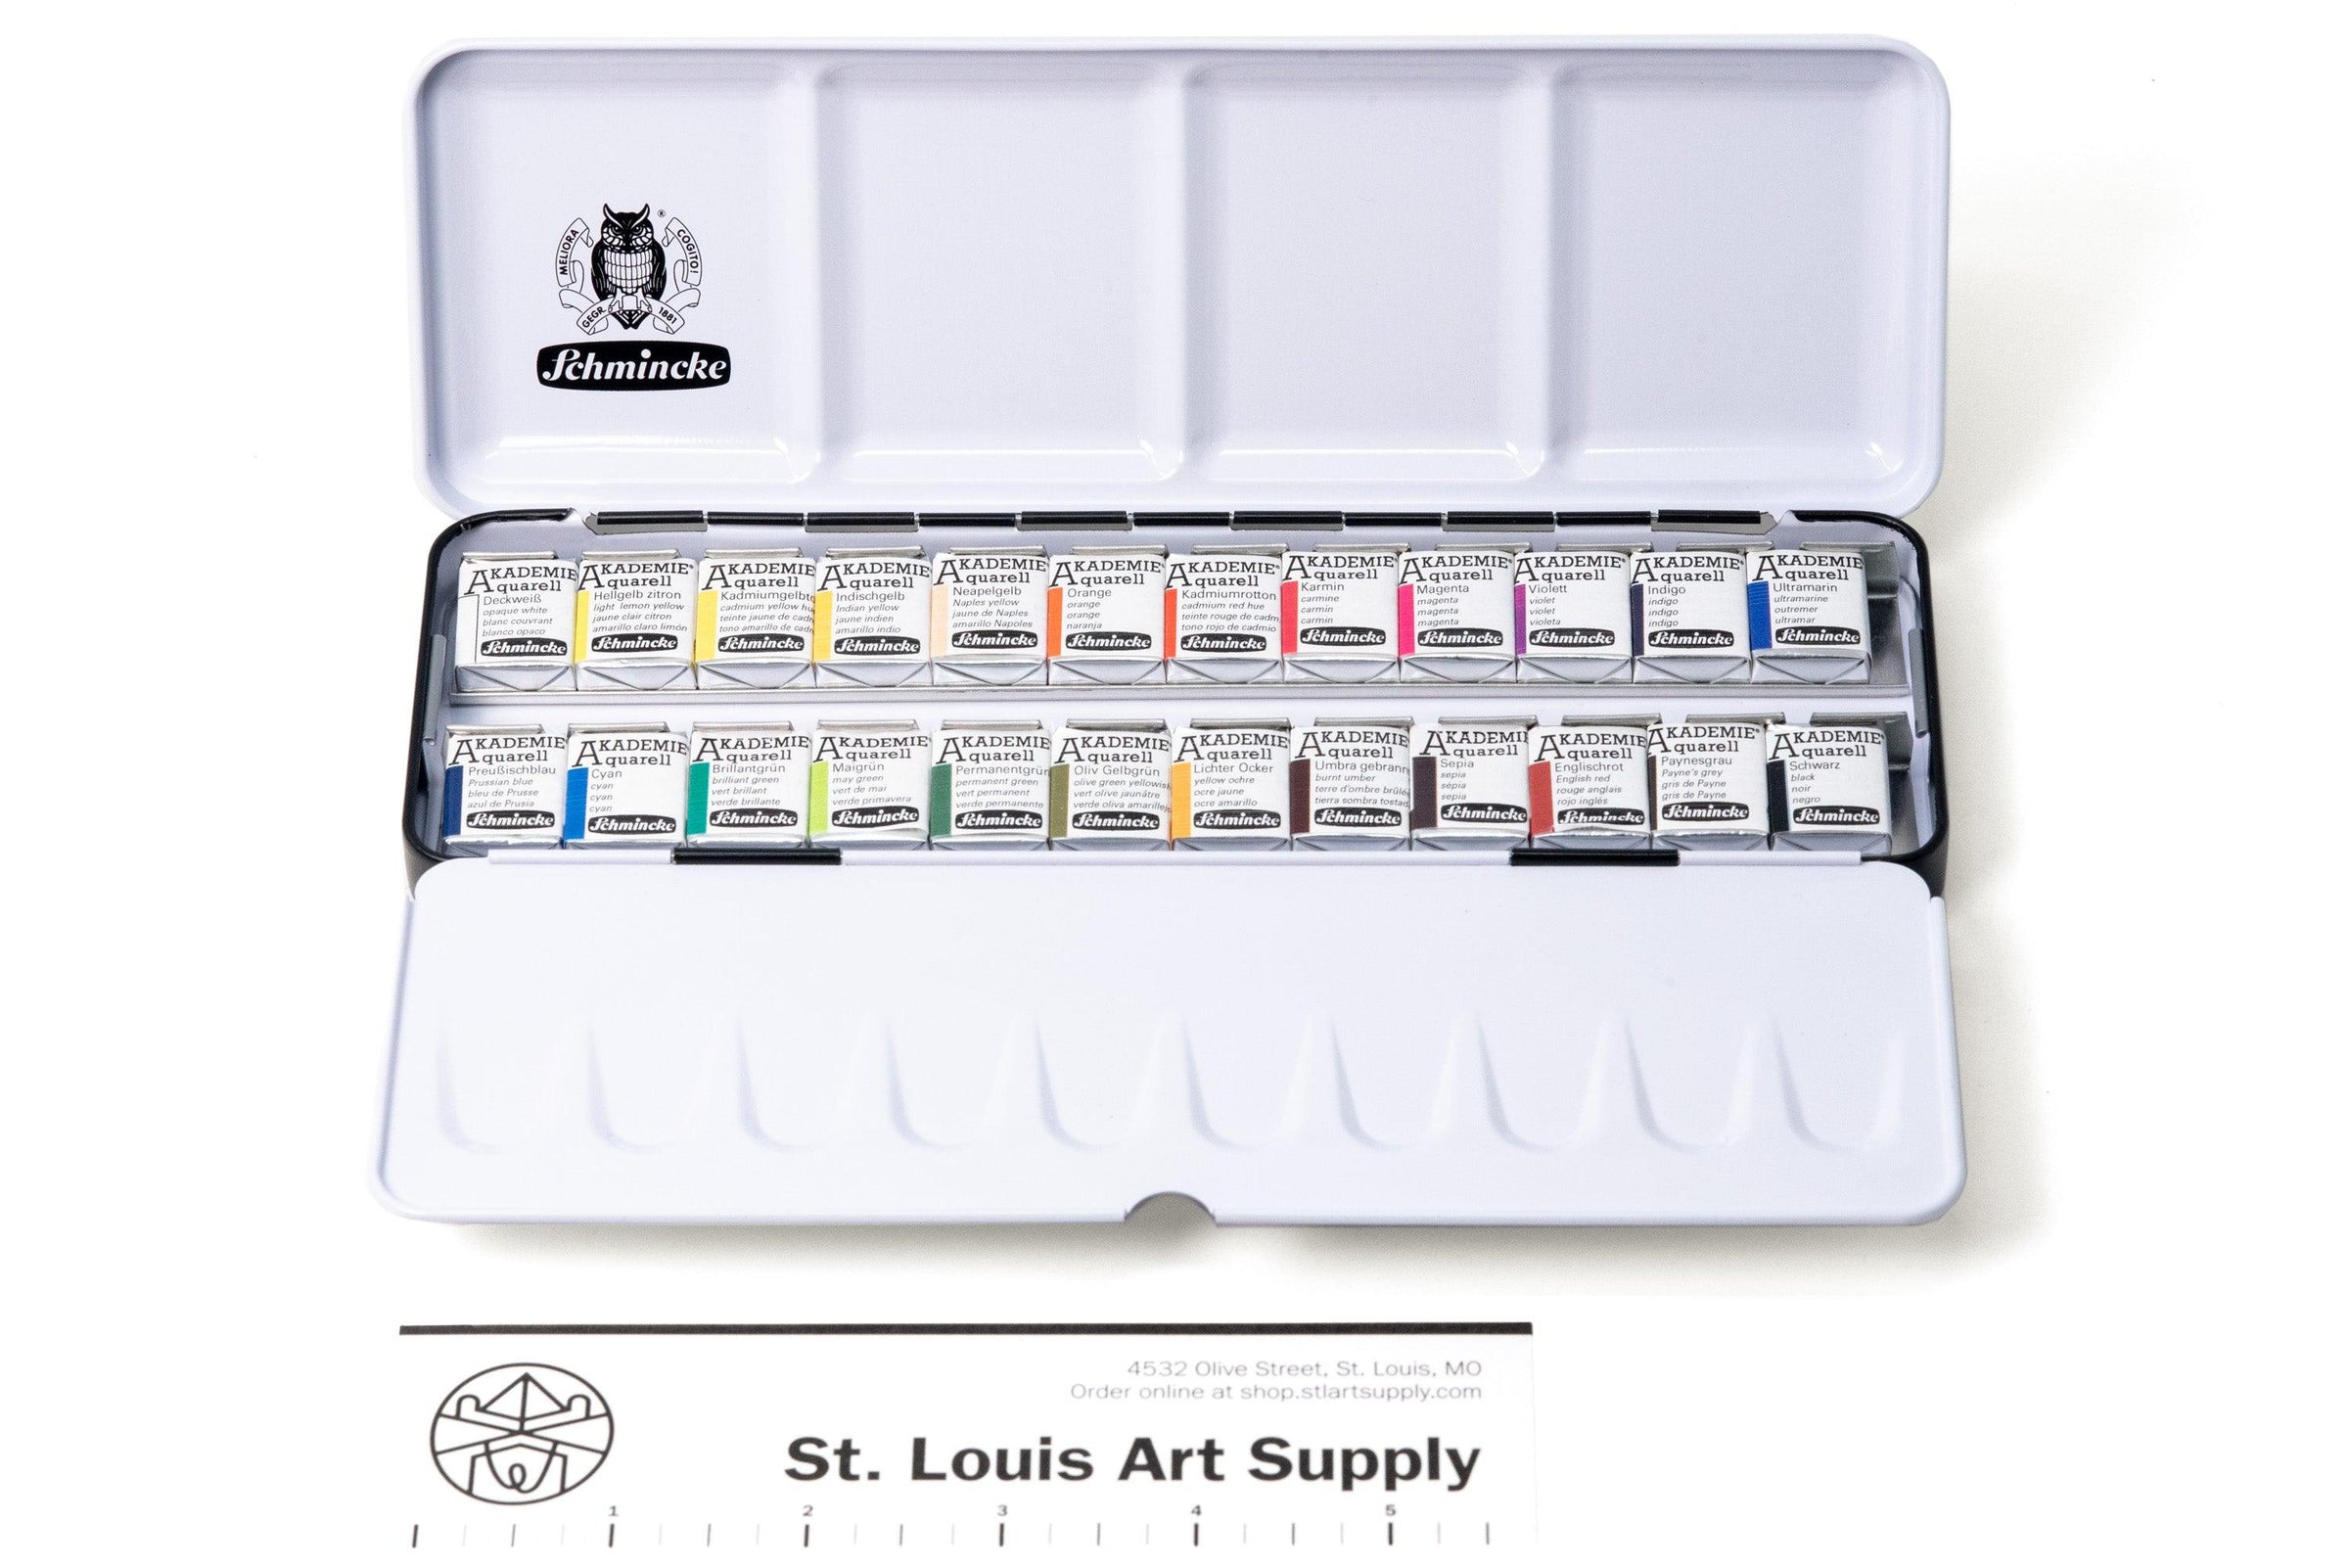 Schmincke - AKADEMIE®AQUARELL Watercolor Box, full assortment 24 x 1/2  pans, 75 424 097, metal box, highly lightfast colors, fine artists'  watercolors